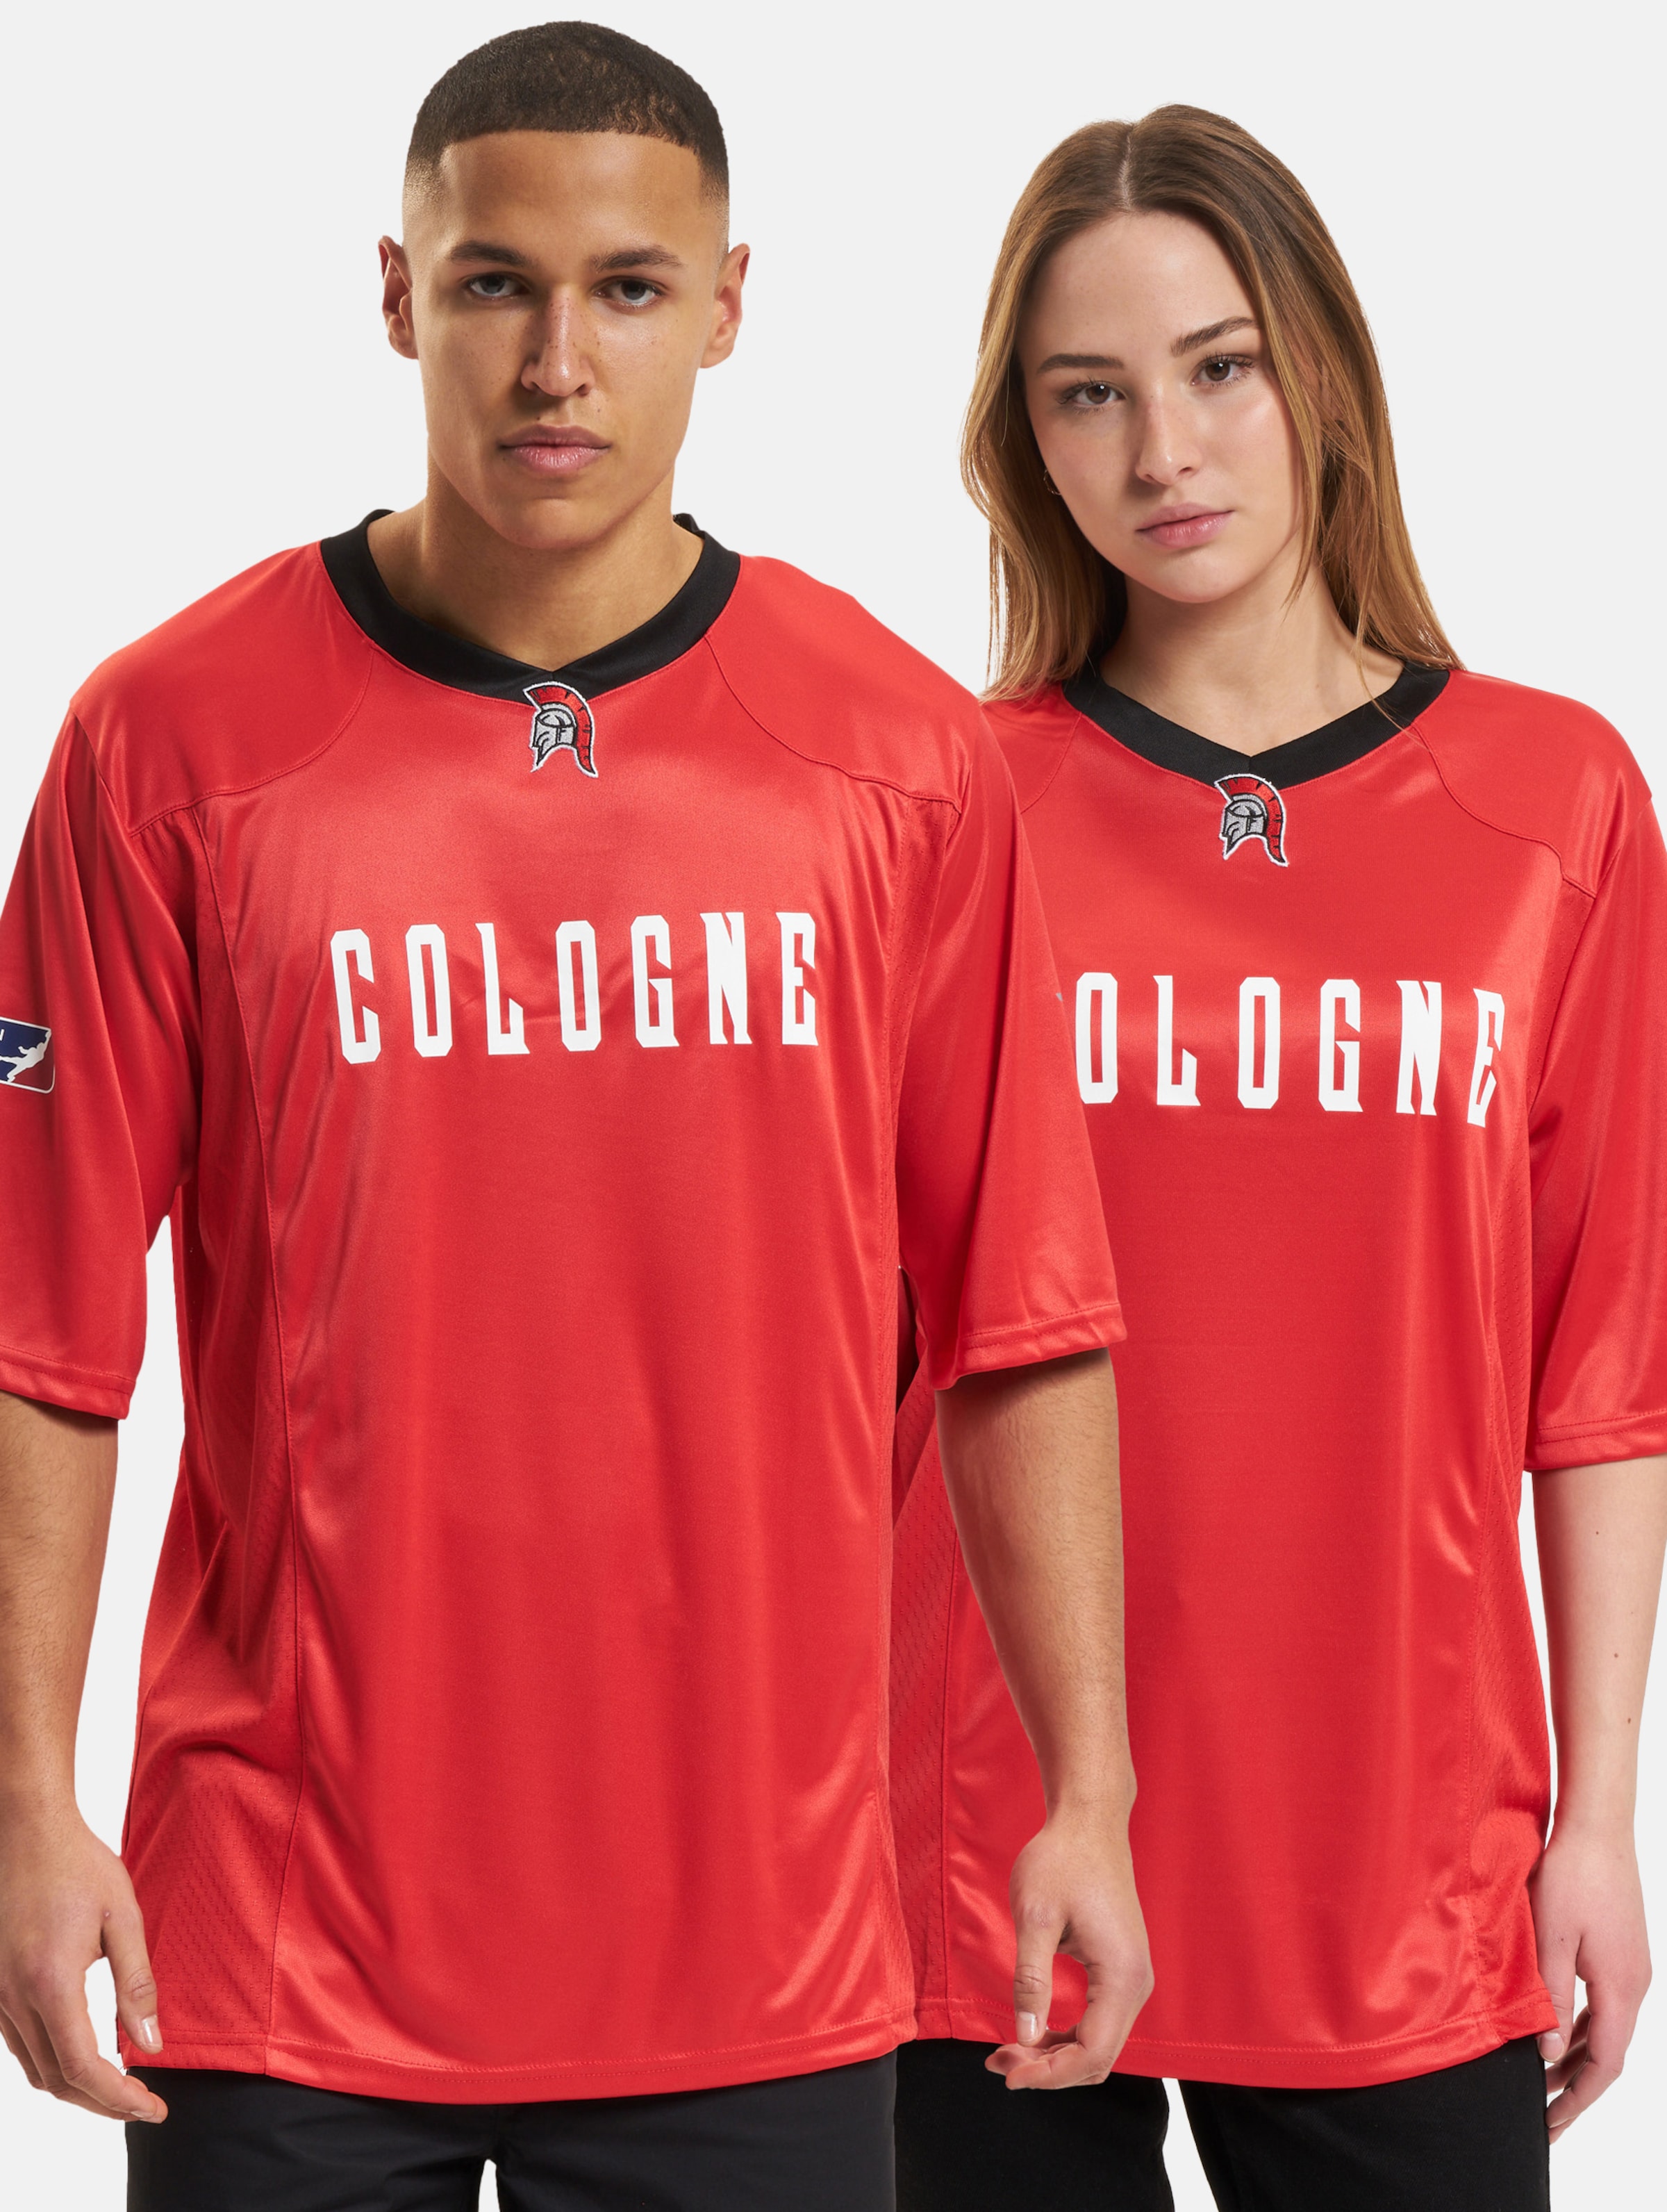 European League Of Football Cologne Centurions Authentic Game Jersey Frauen,Männer,Unisex op kleur rood, Maat M